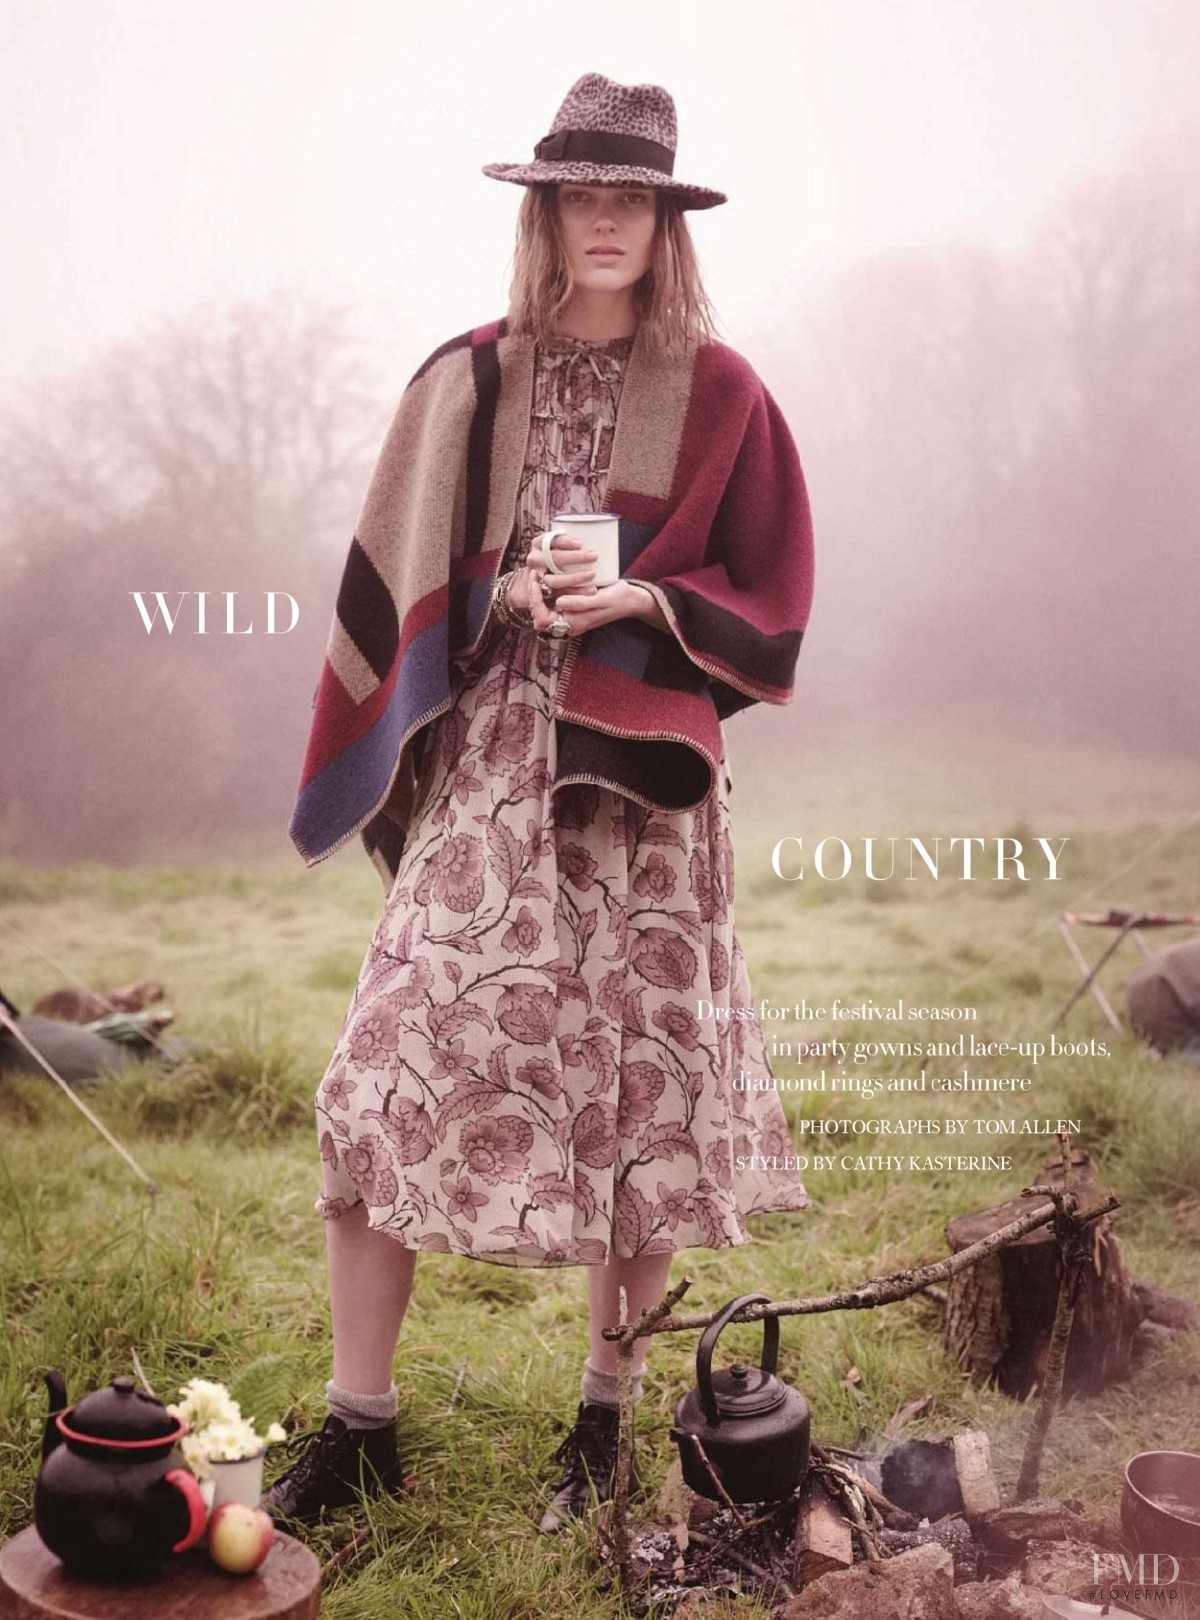 Wild Country in Harper's Bazaar UK with Emma Champtaloup wearing ...